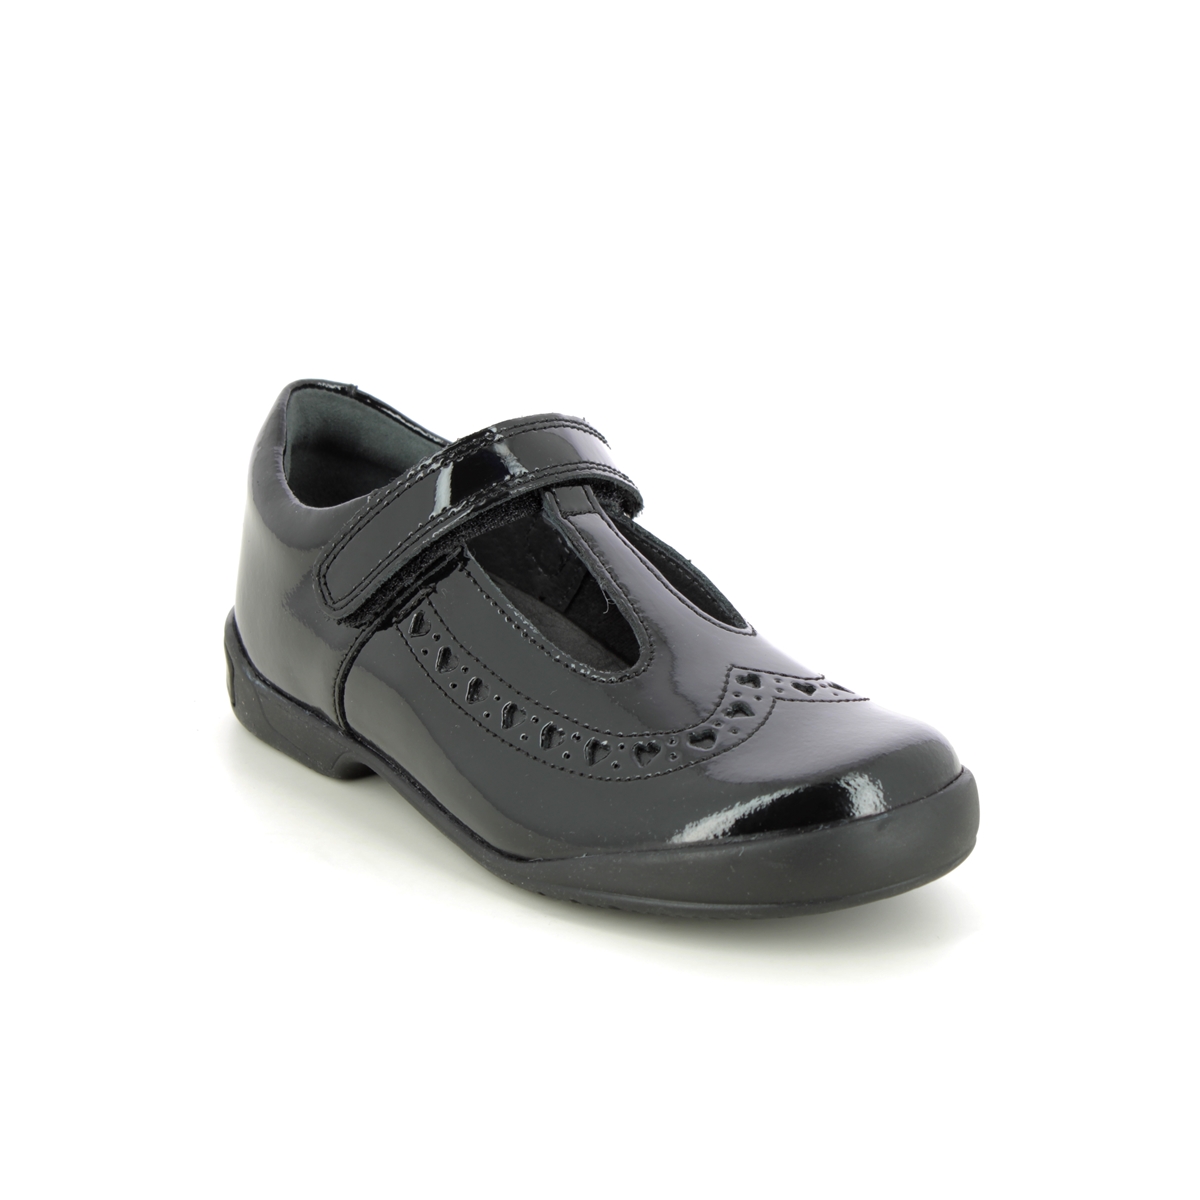 Start Rite - Leapfrog In Black Patent 2789-35E In Size 10.5 In Plain Black Patent For School Girls Shoes  In Black Patent For kids